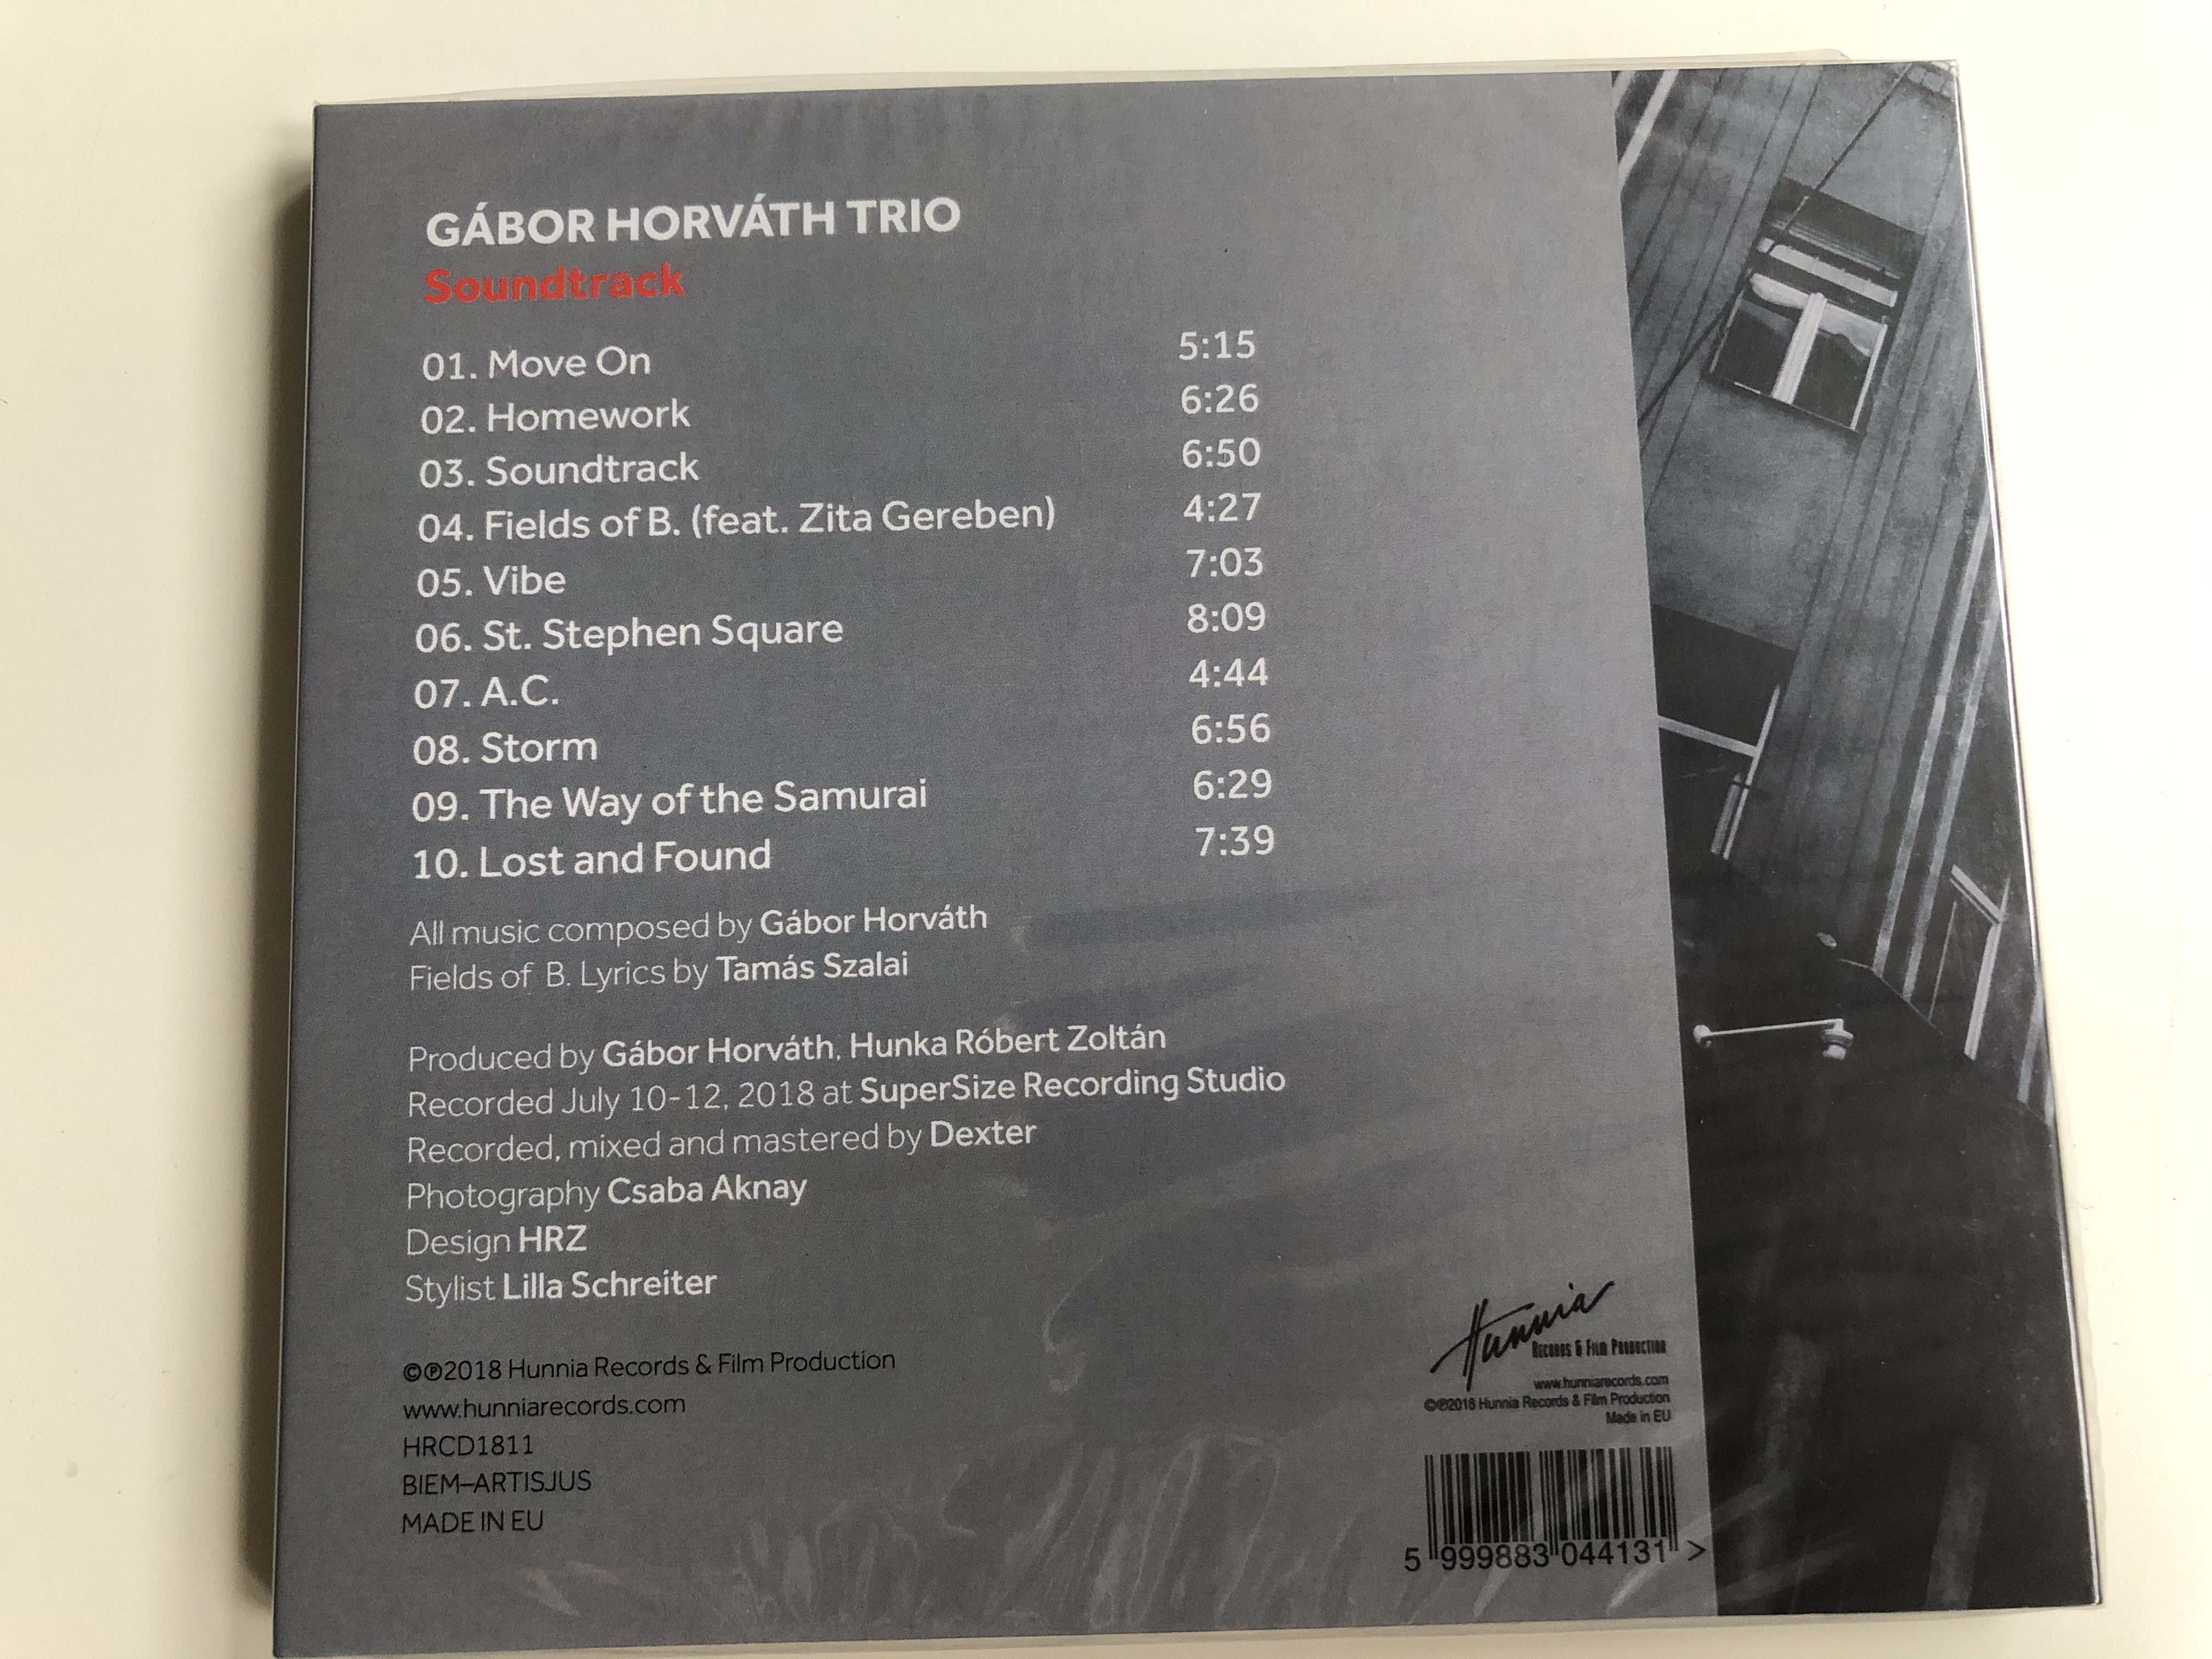 gabor-horvath-trio-soundtrack-hunnia-records-audio-cd-2018-hrcd1811-2-.jpg